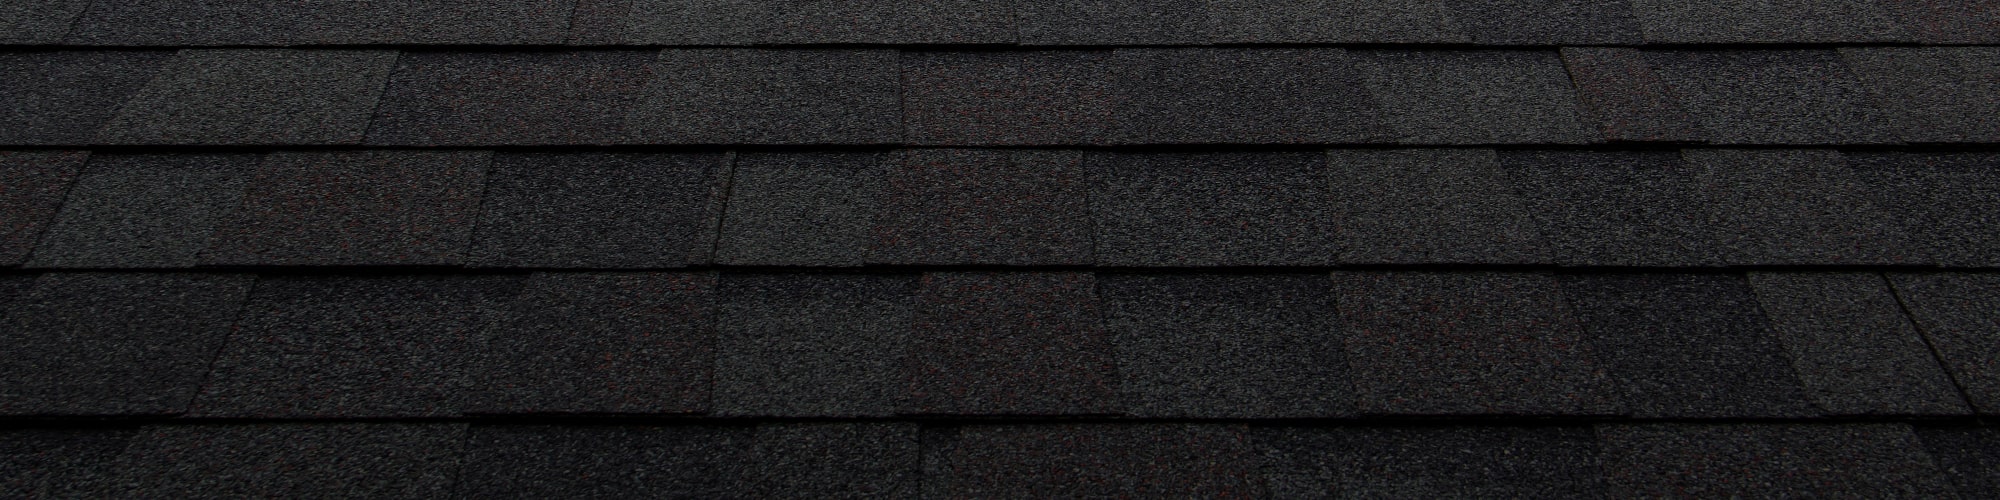 Roof replacement job in Lakeshore, Michigan